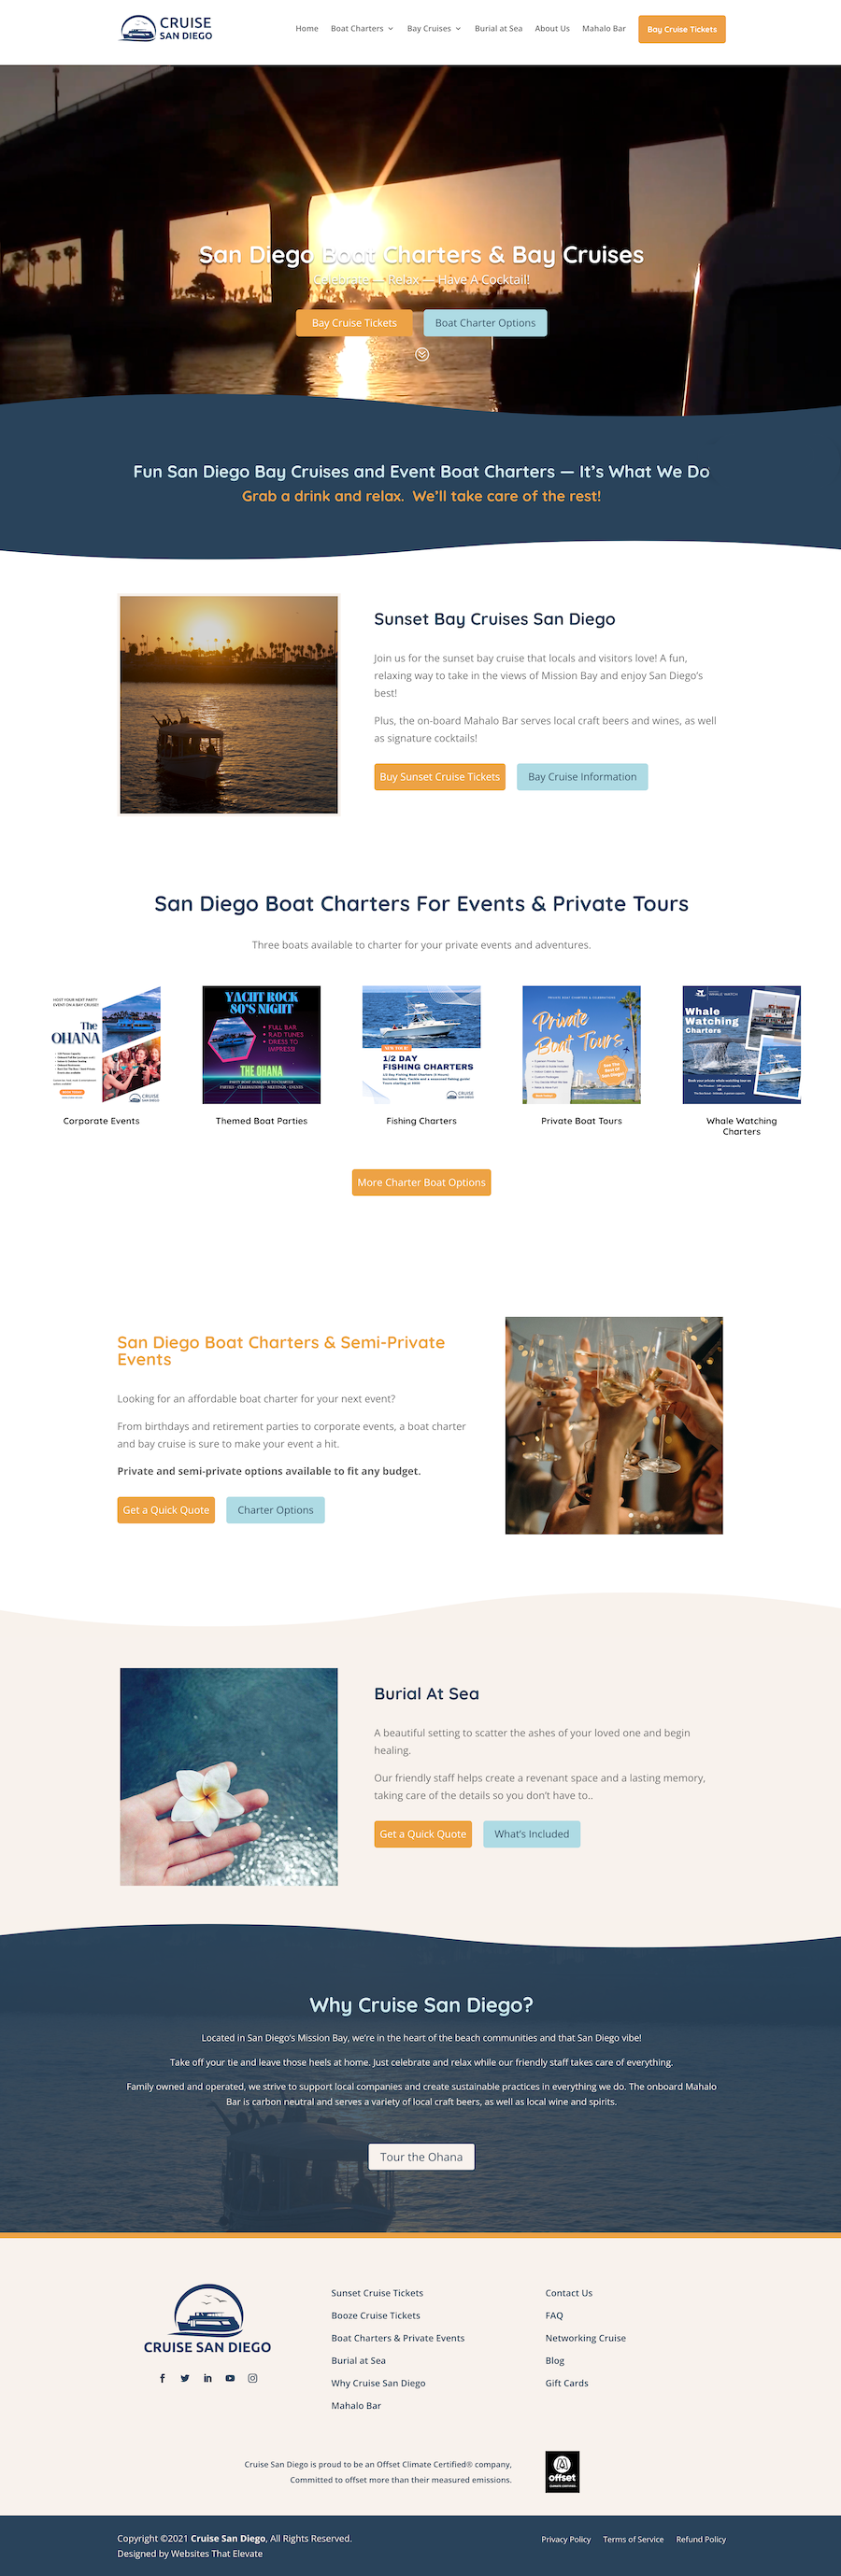 Boat tour adventure website design